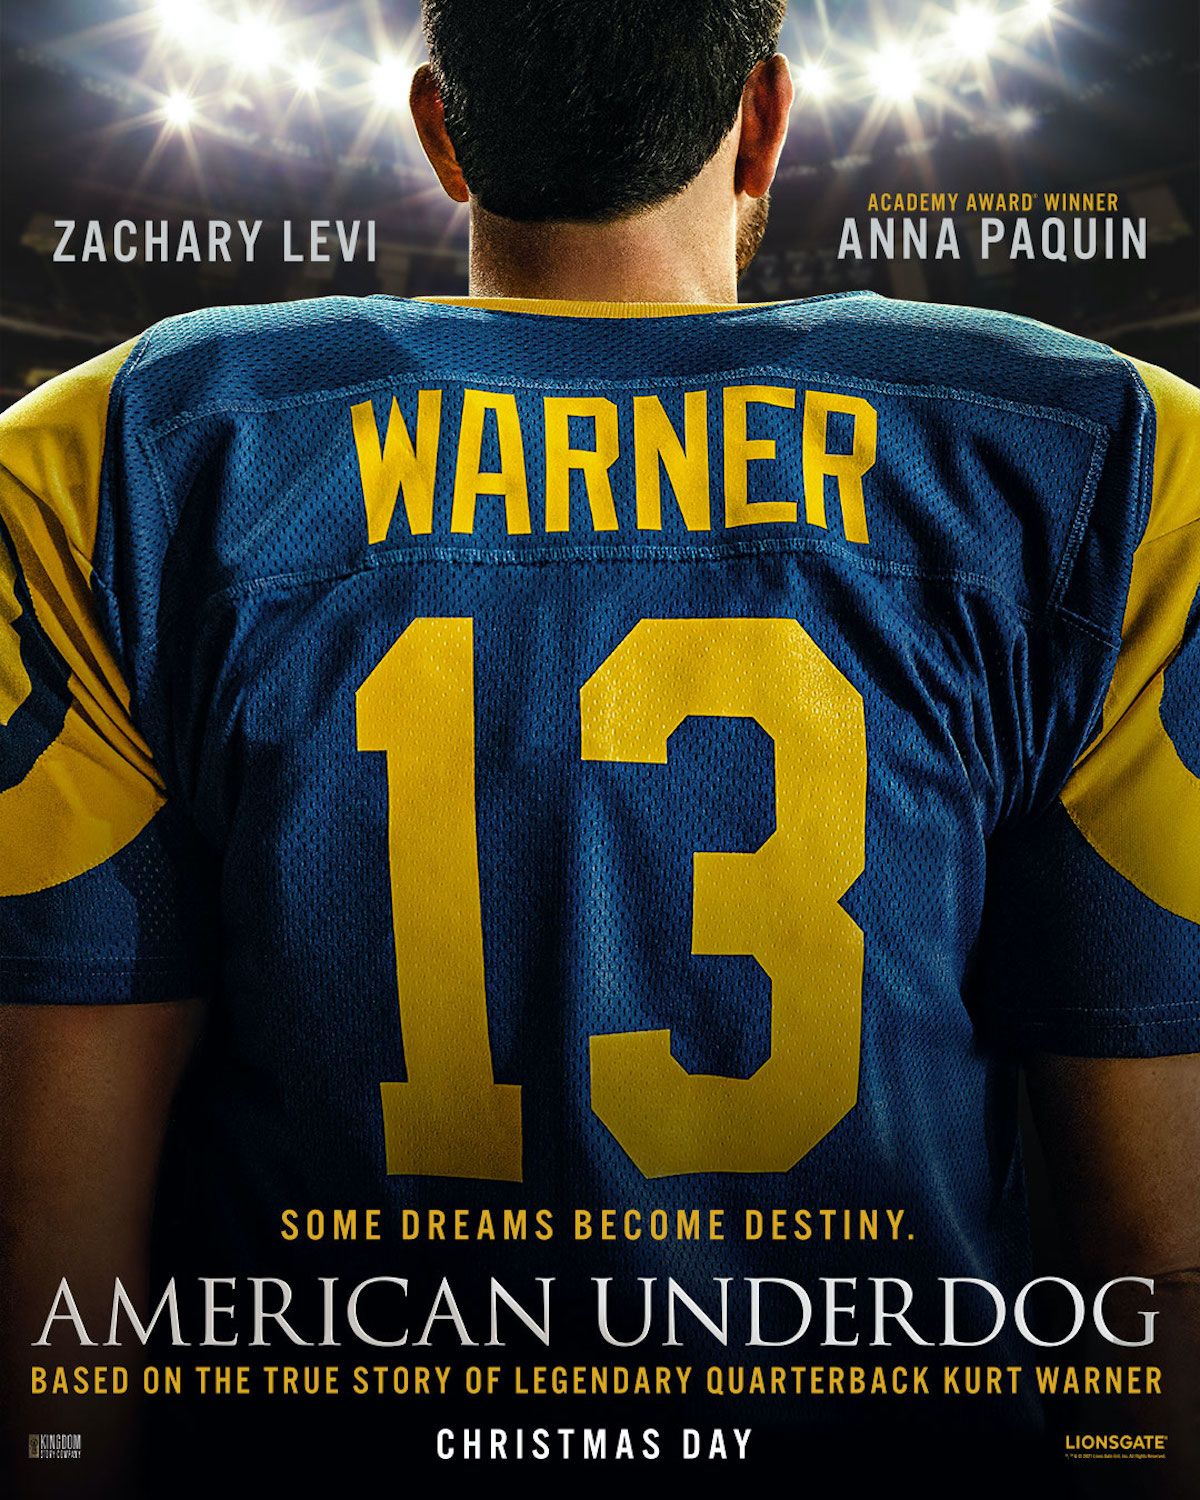 American Underdog Trailer Stars Zachary Levi as NFL Legend Kurt Warner